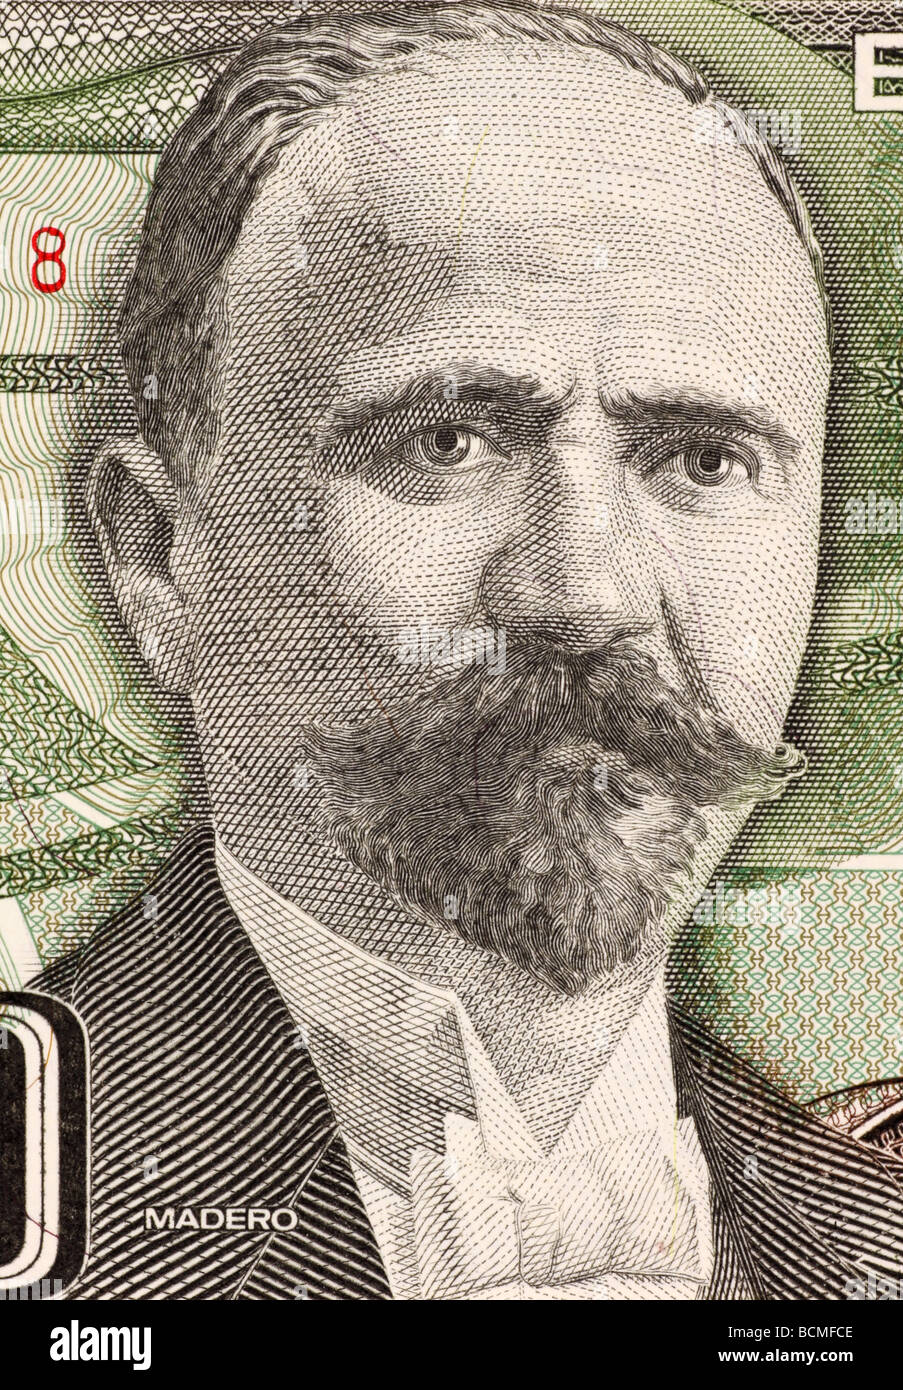 Francisco Madero on 500 Pesos 1984 Banknote from Mexico Stock Photo